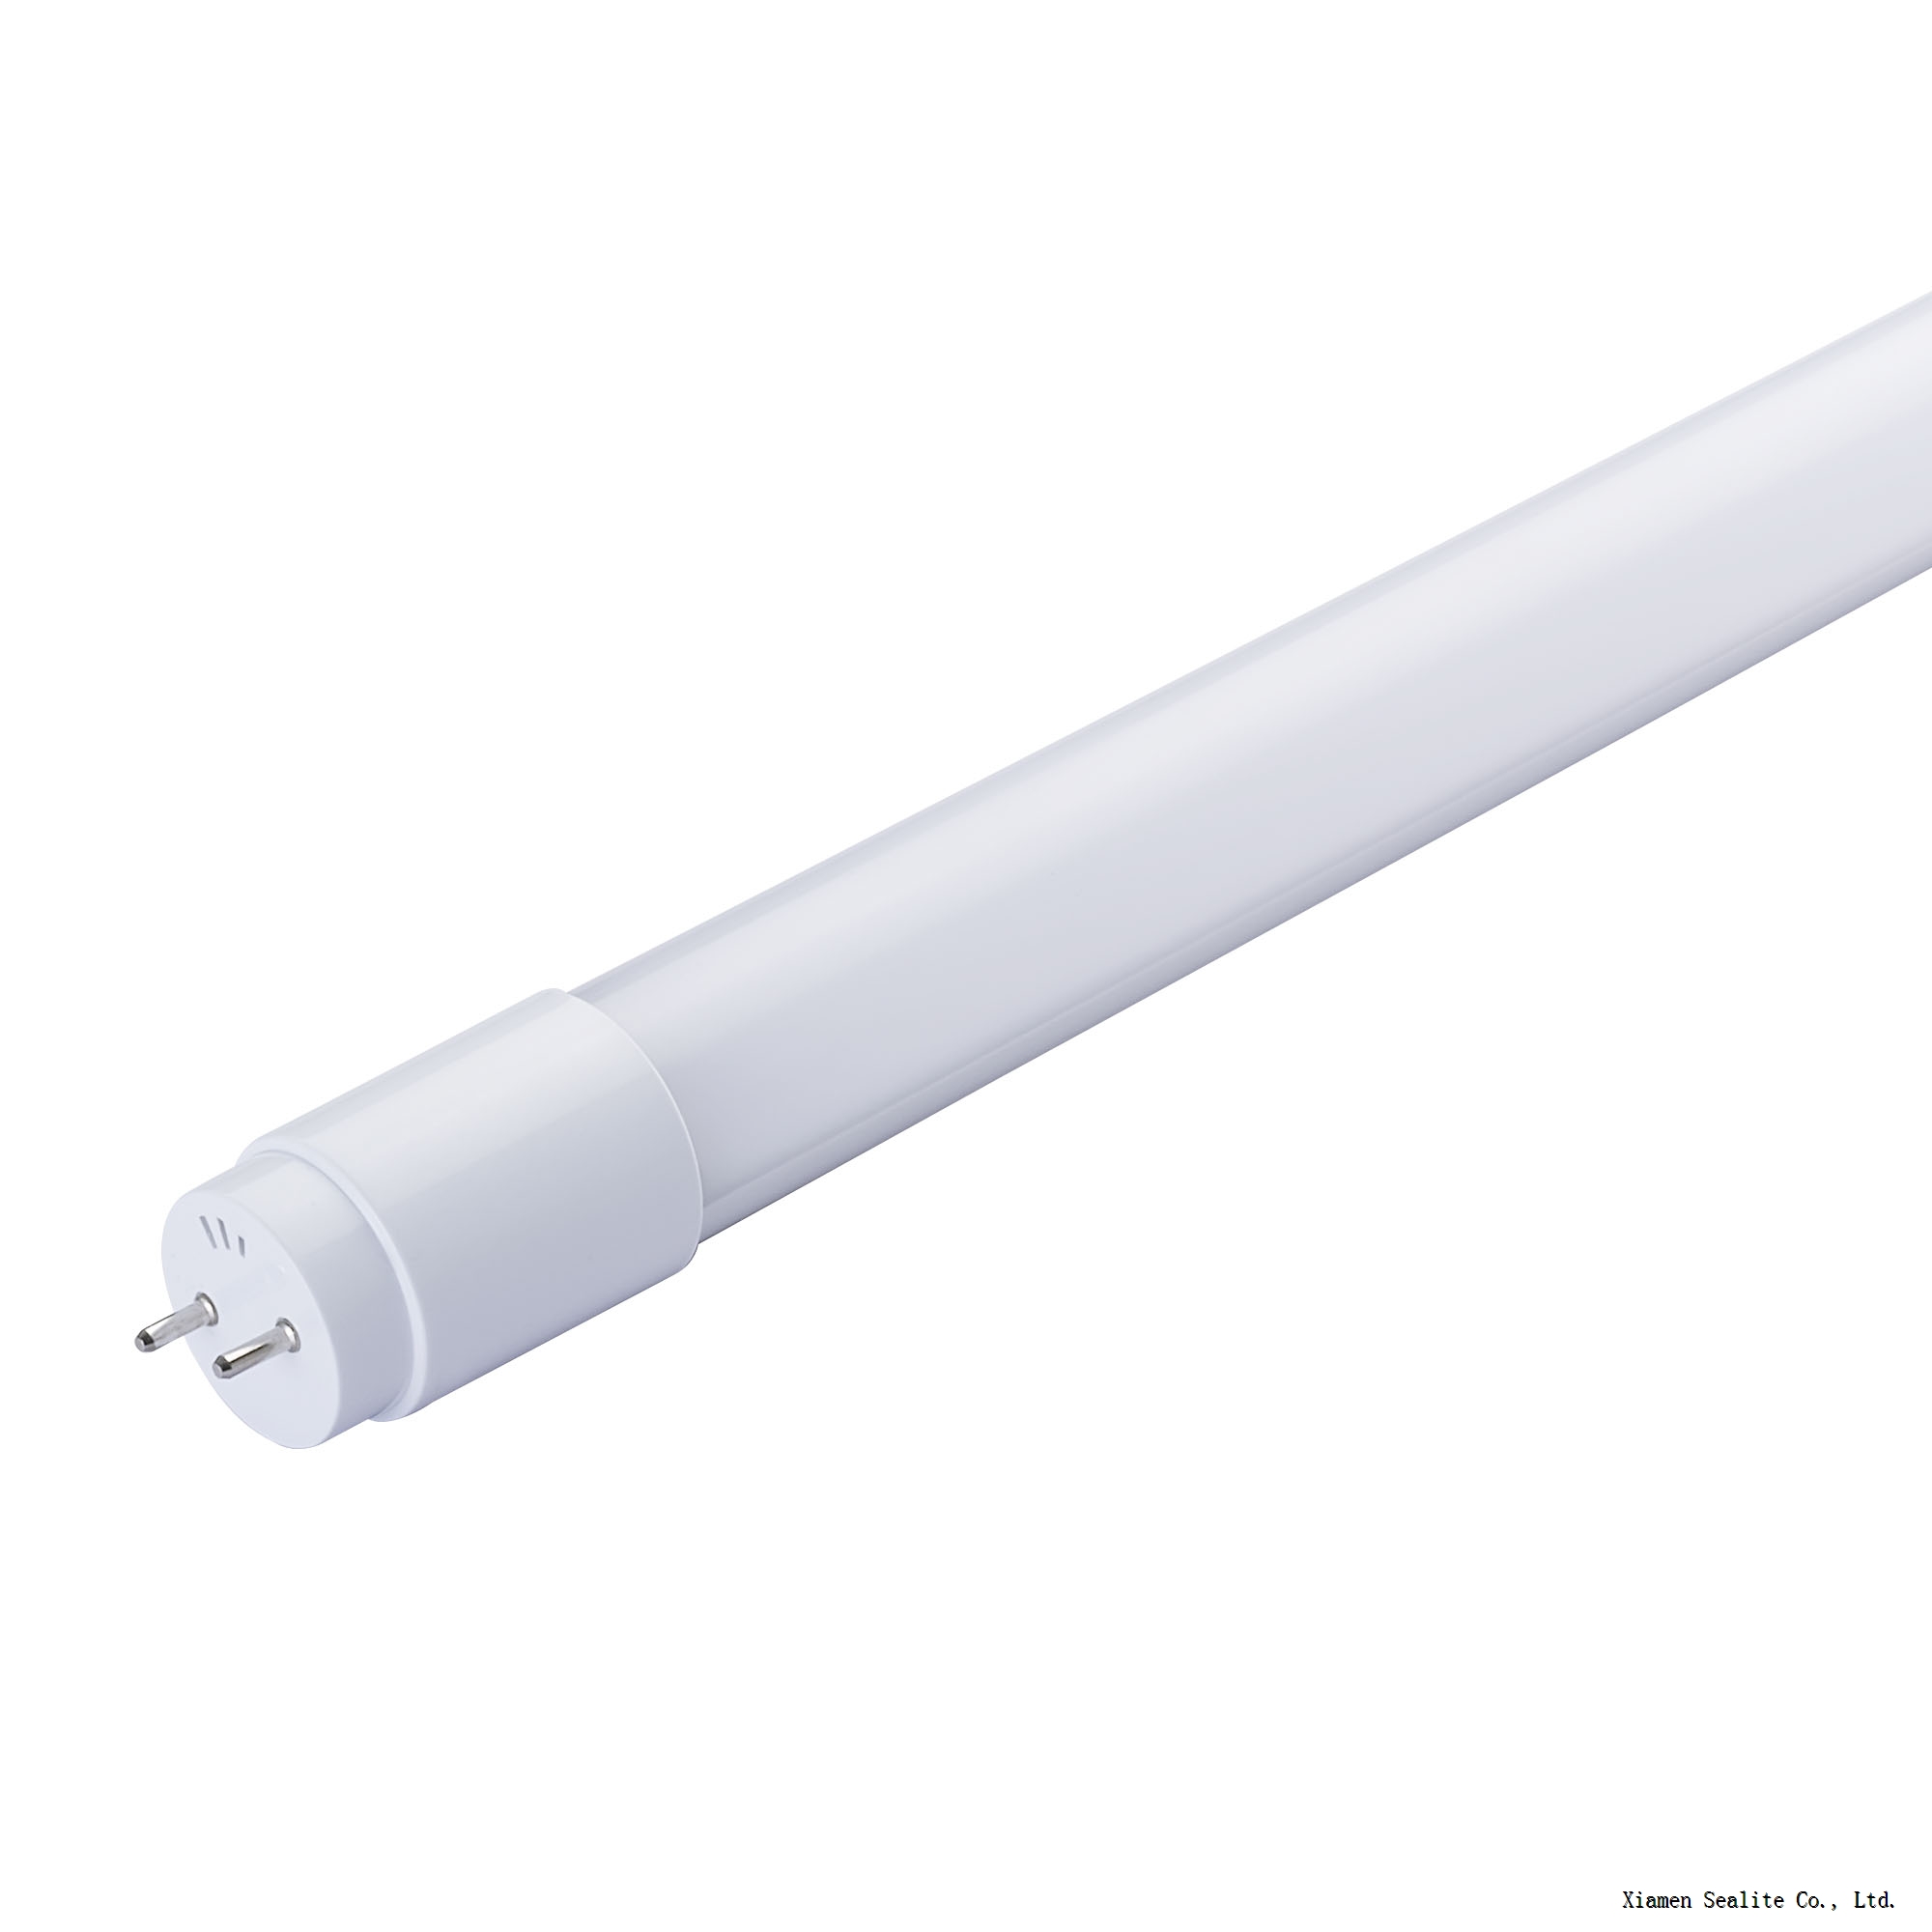 NEW LED Tube Light T8 9W with High Luminous Efficacy